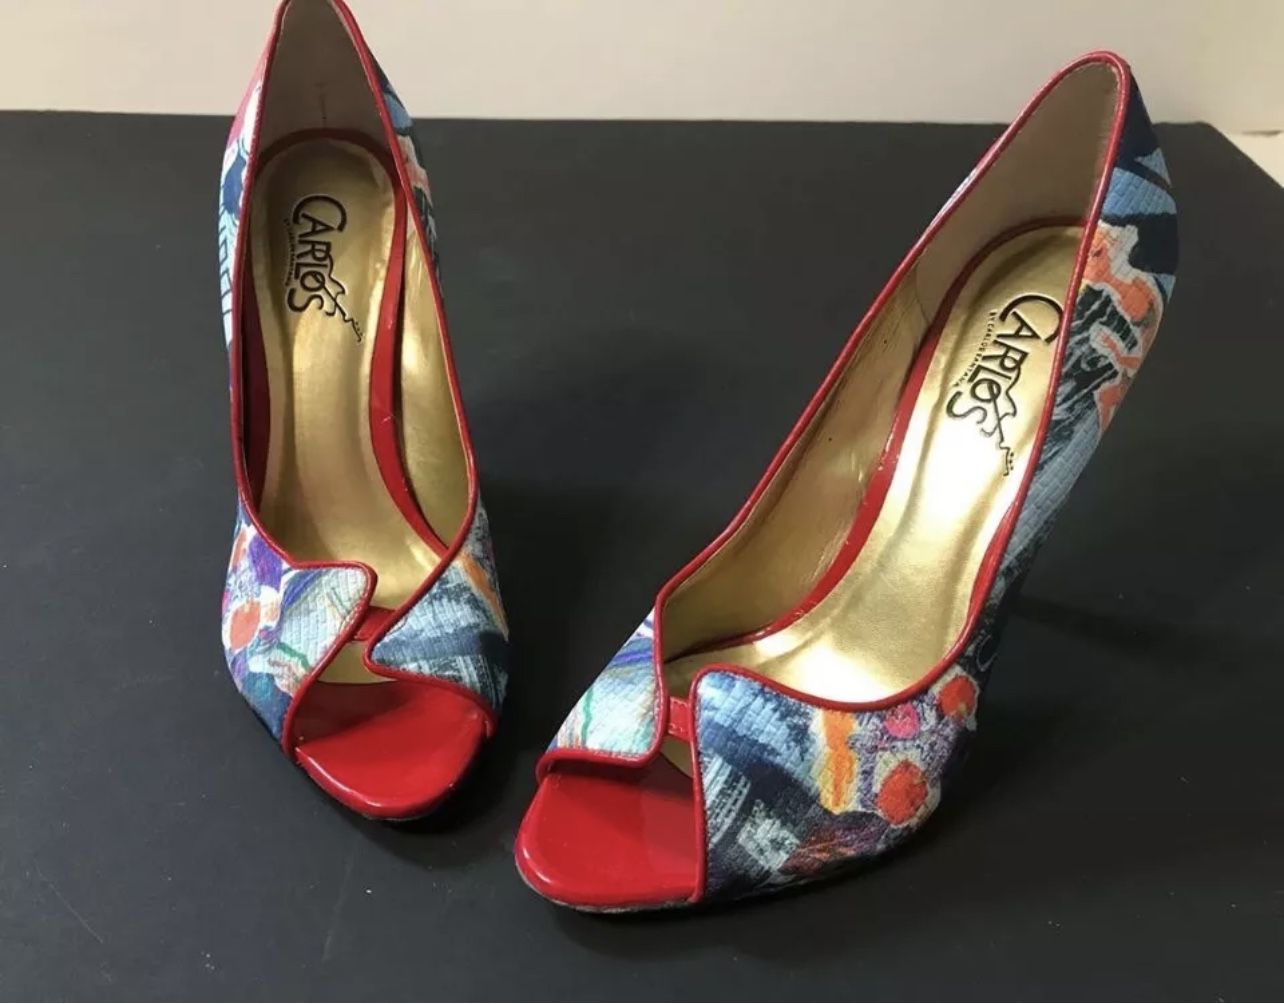 Authentic Carlos Santana Ladies Red/blue Stiletto Heel Open Toe Shoes Size 7.5.